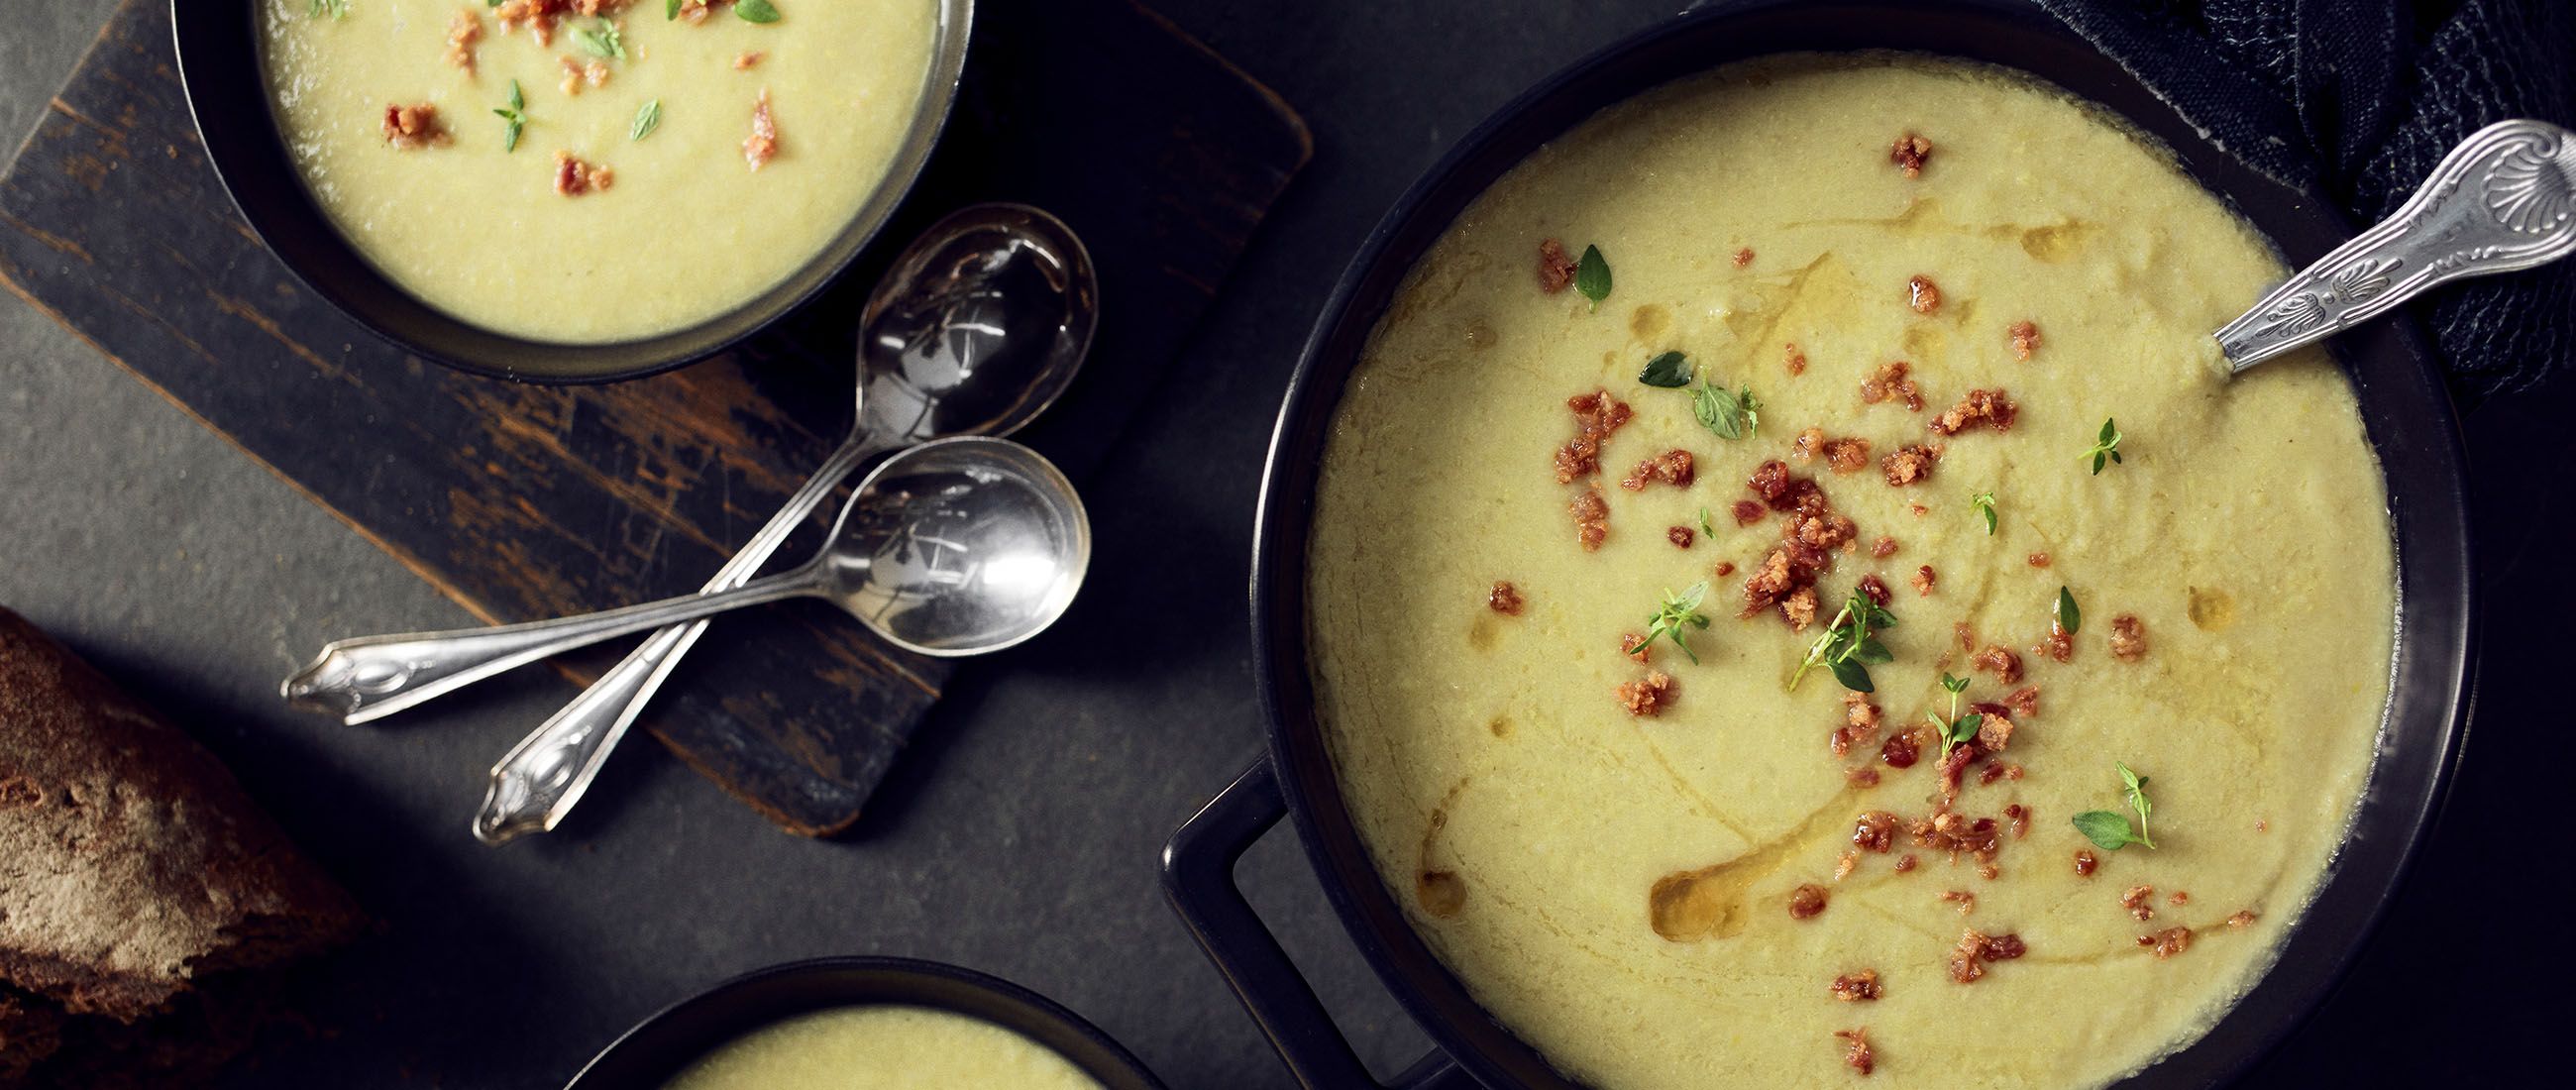 Artichoke, leek and potato soup